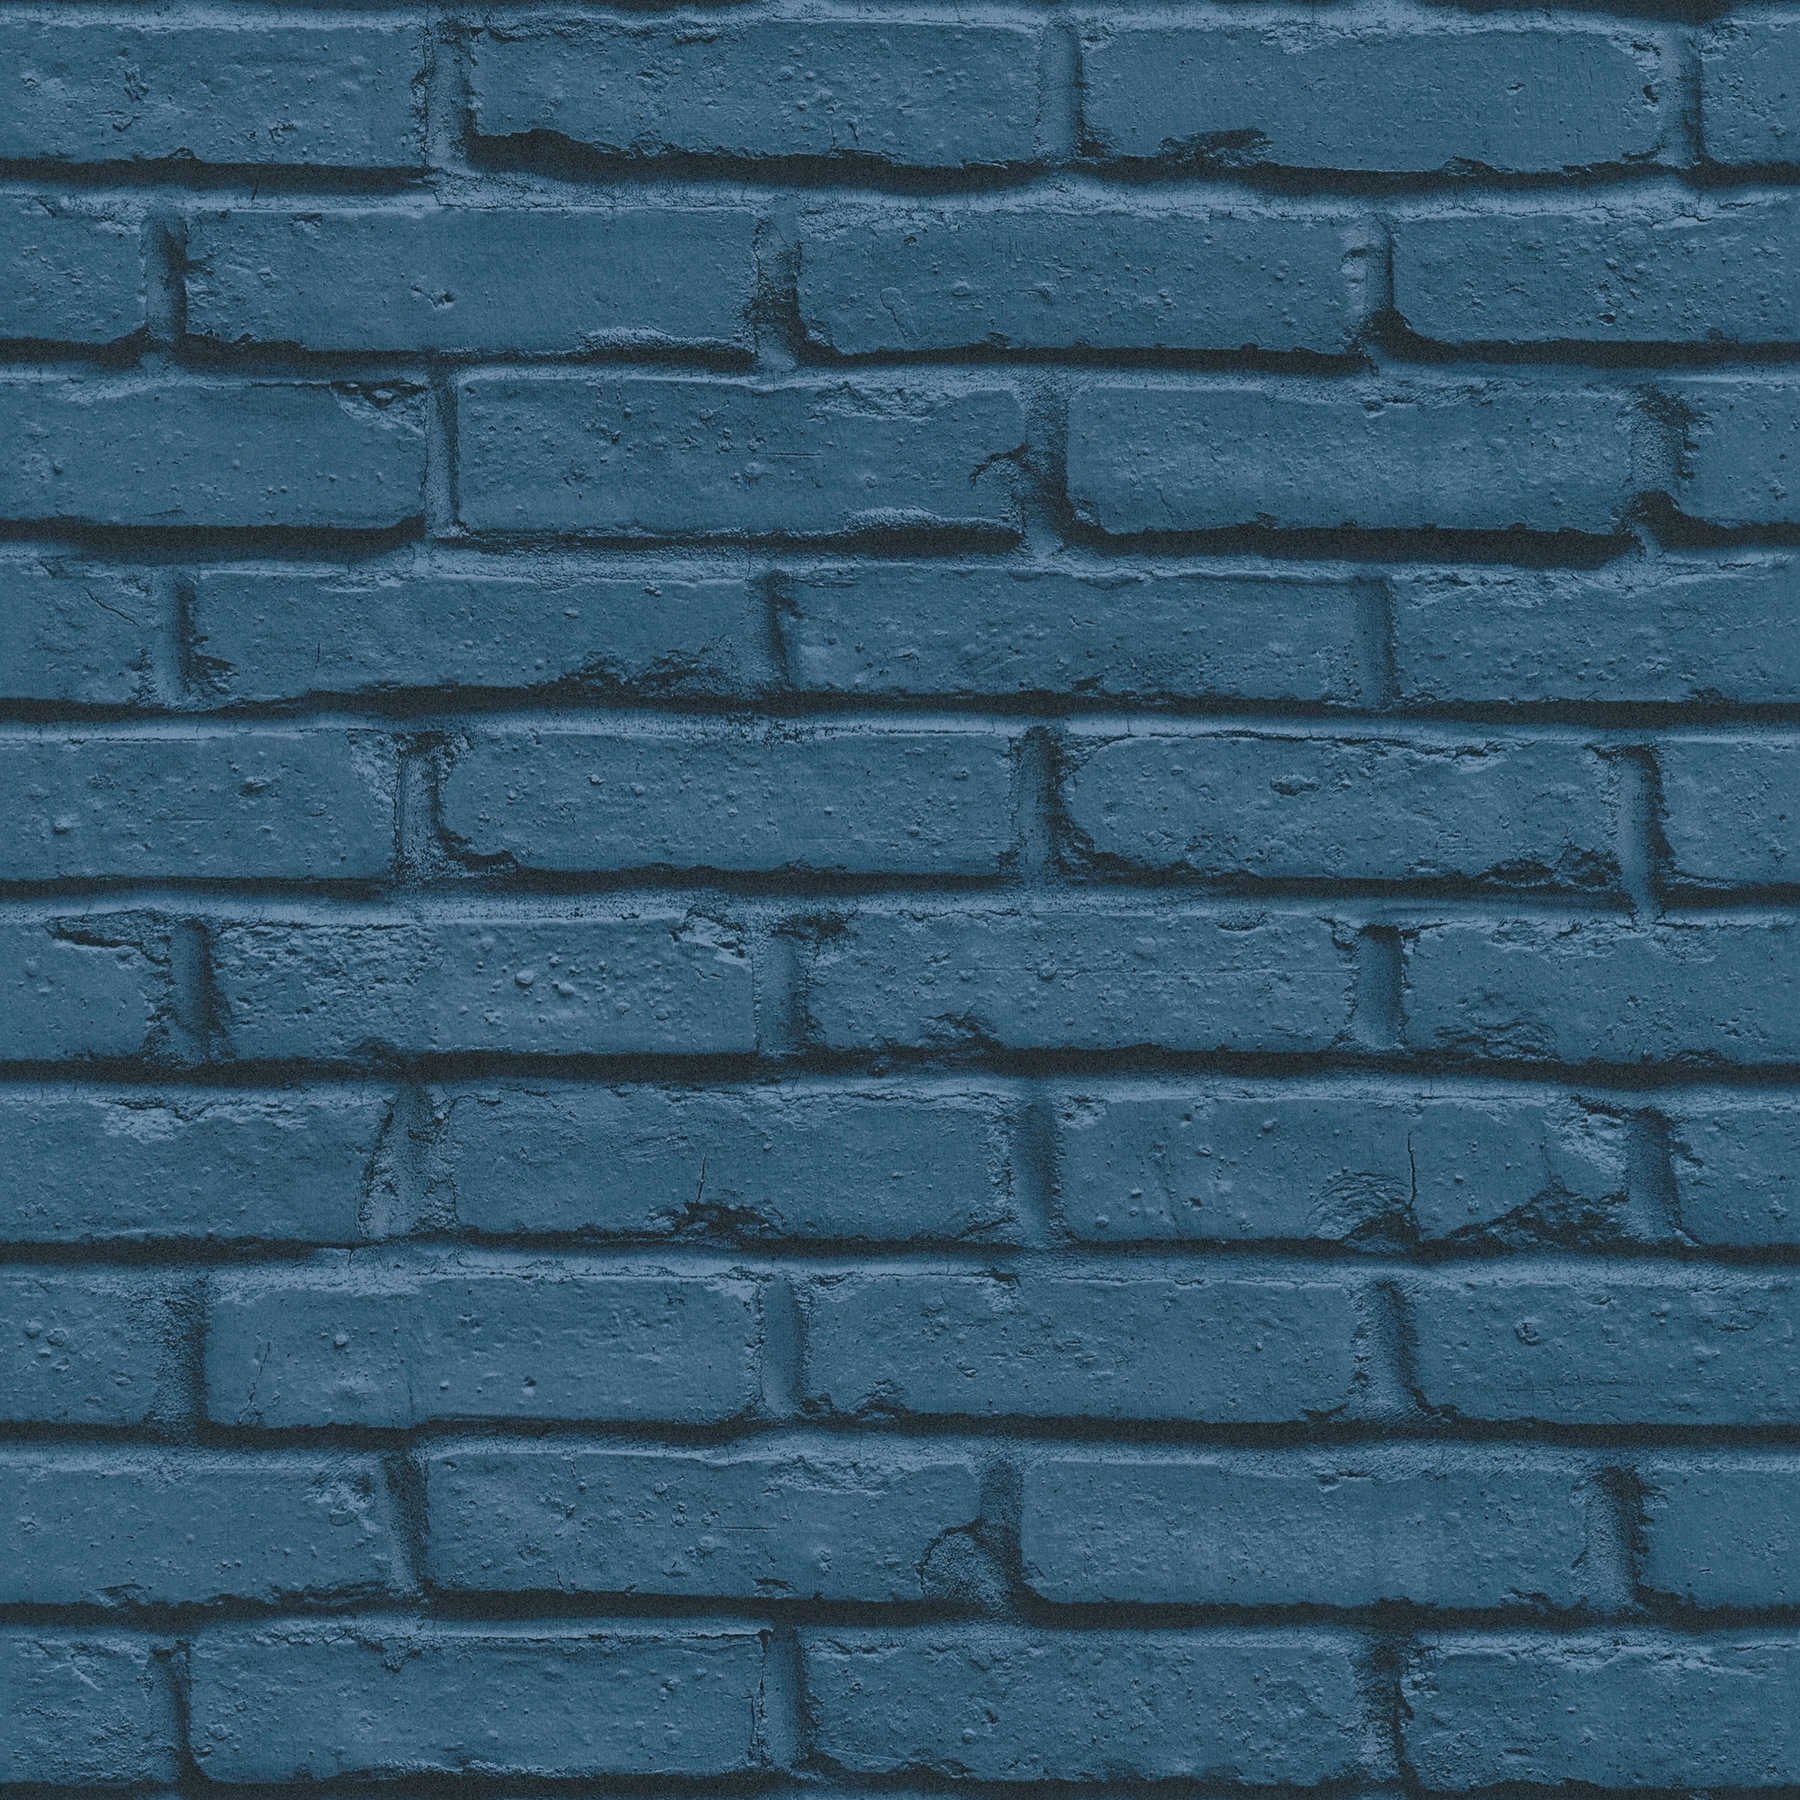         3D wallpaper stone look coloured brick wall - blue
    